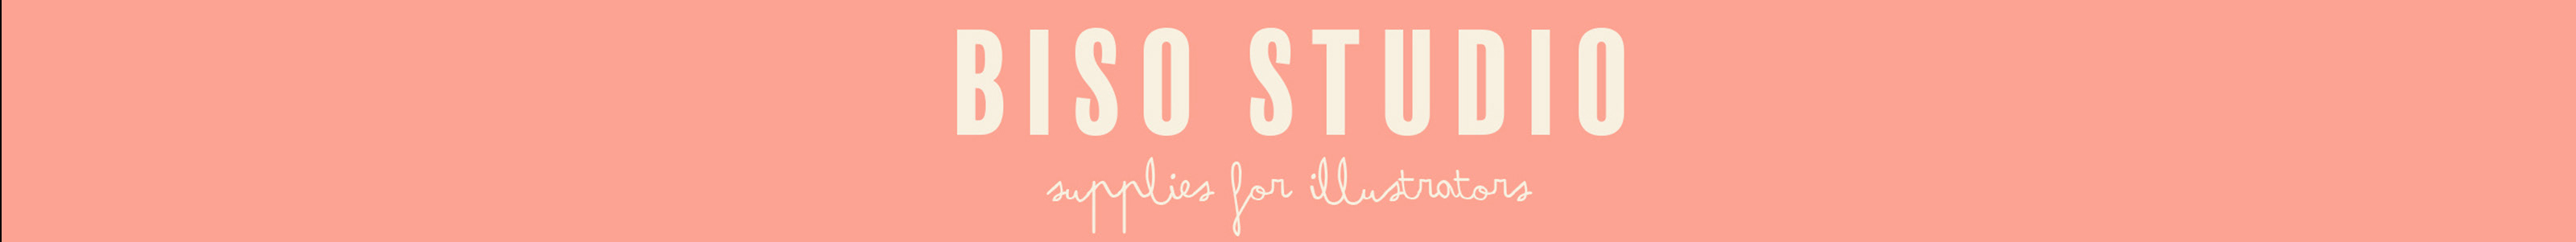 Biso Studio's profile banner